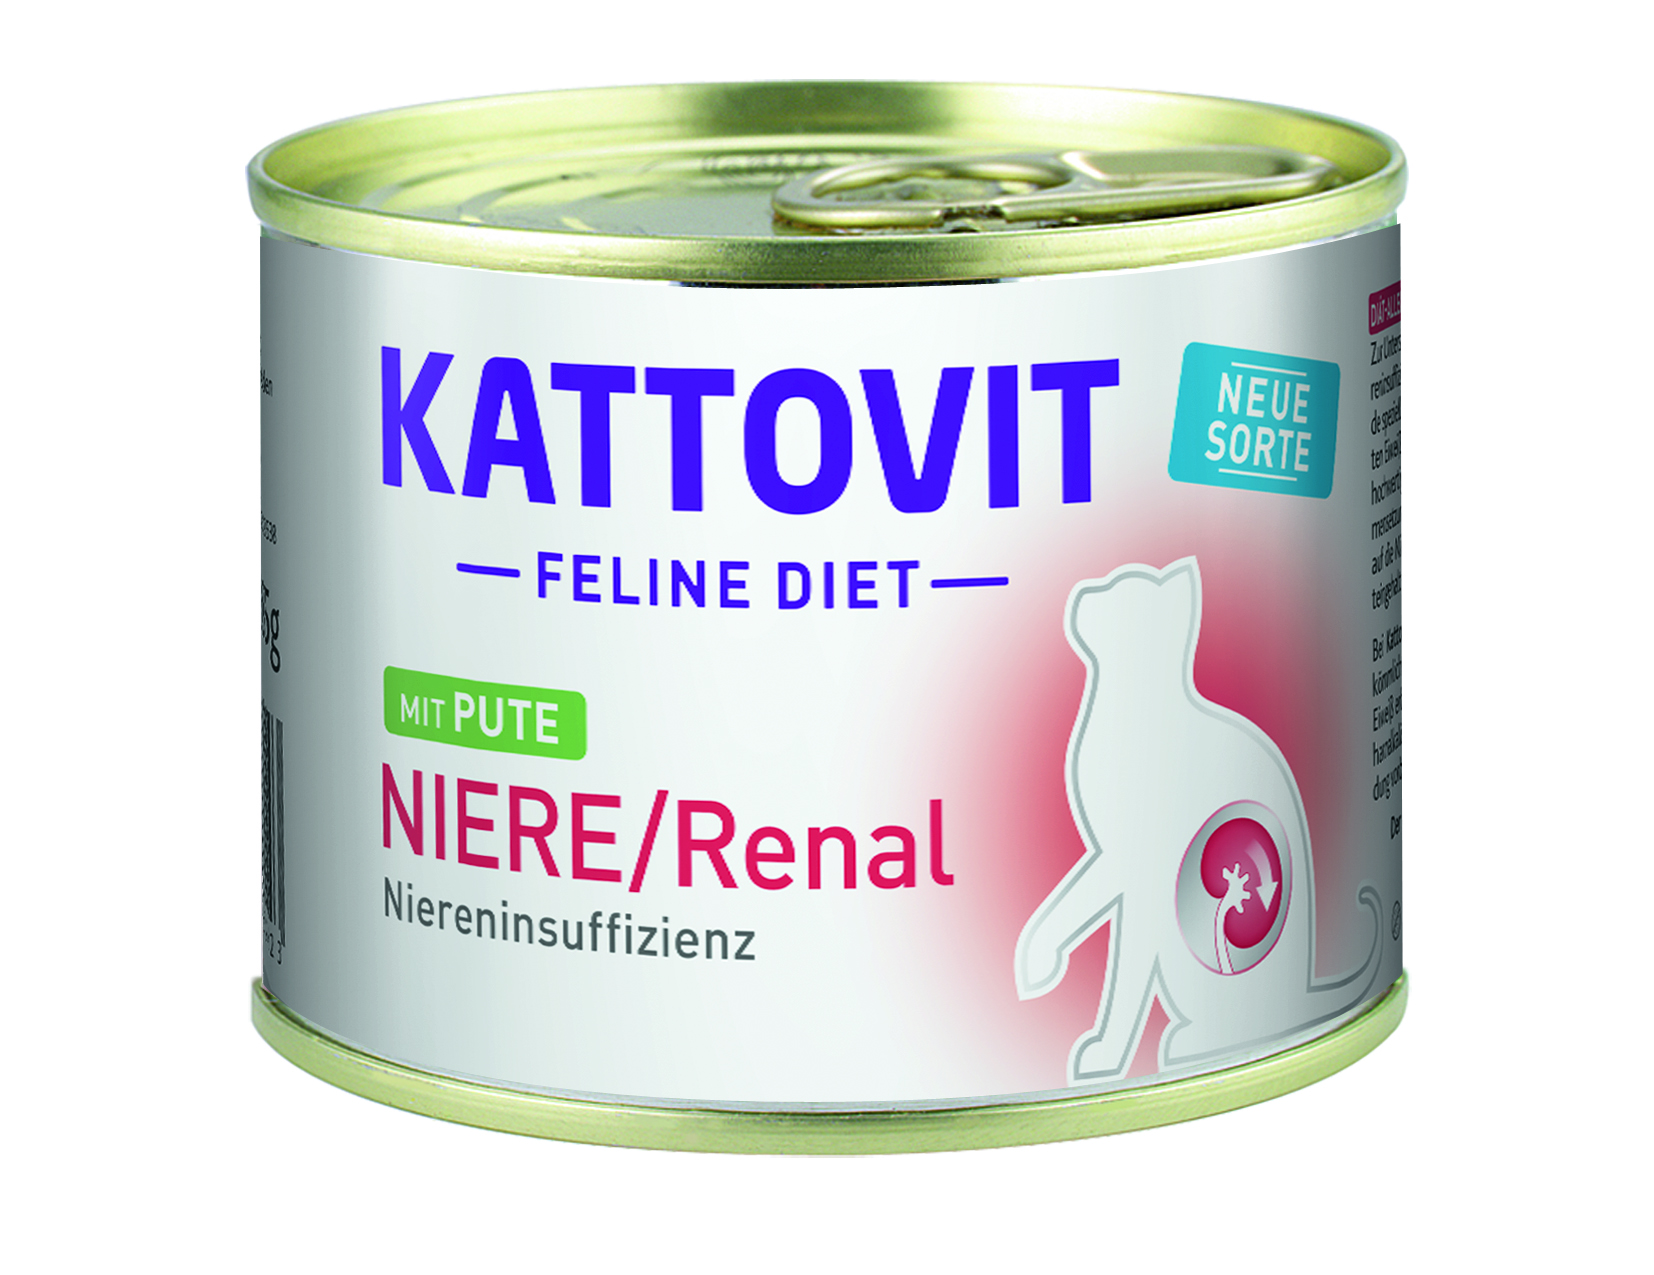 Kattovit Feline Diet Niere/Renal Pute 185g